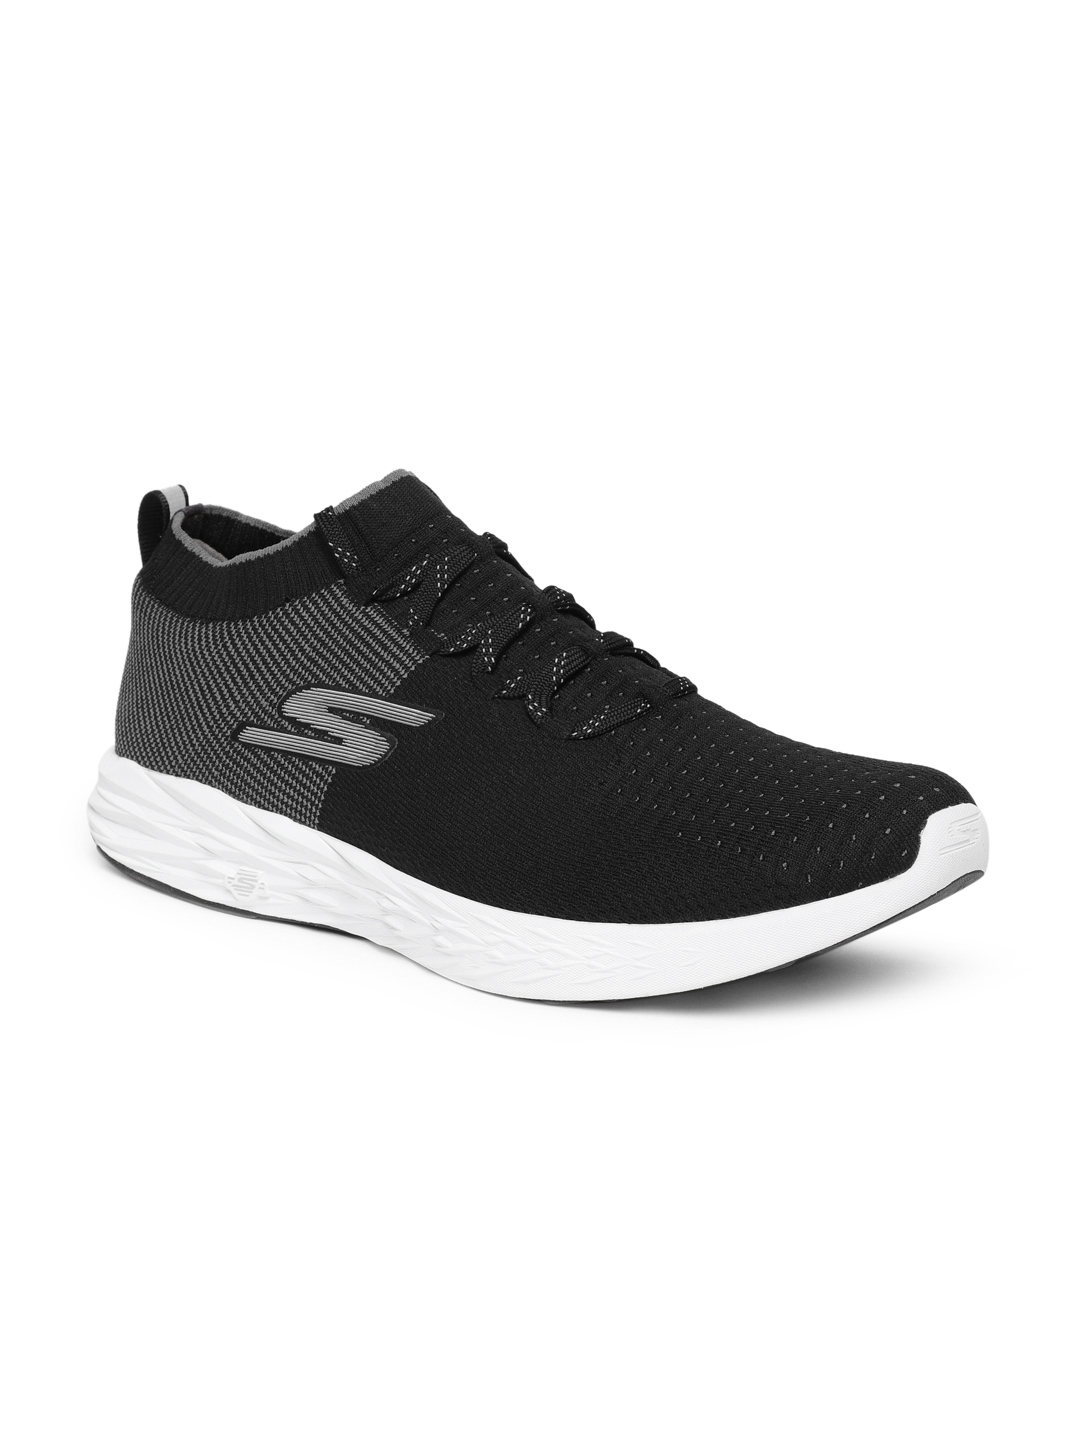 Buy Skechers Go Run Black Running Shoes - Sports Shoes for Men 7899389 Myntra